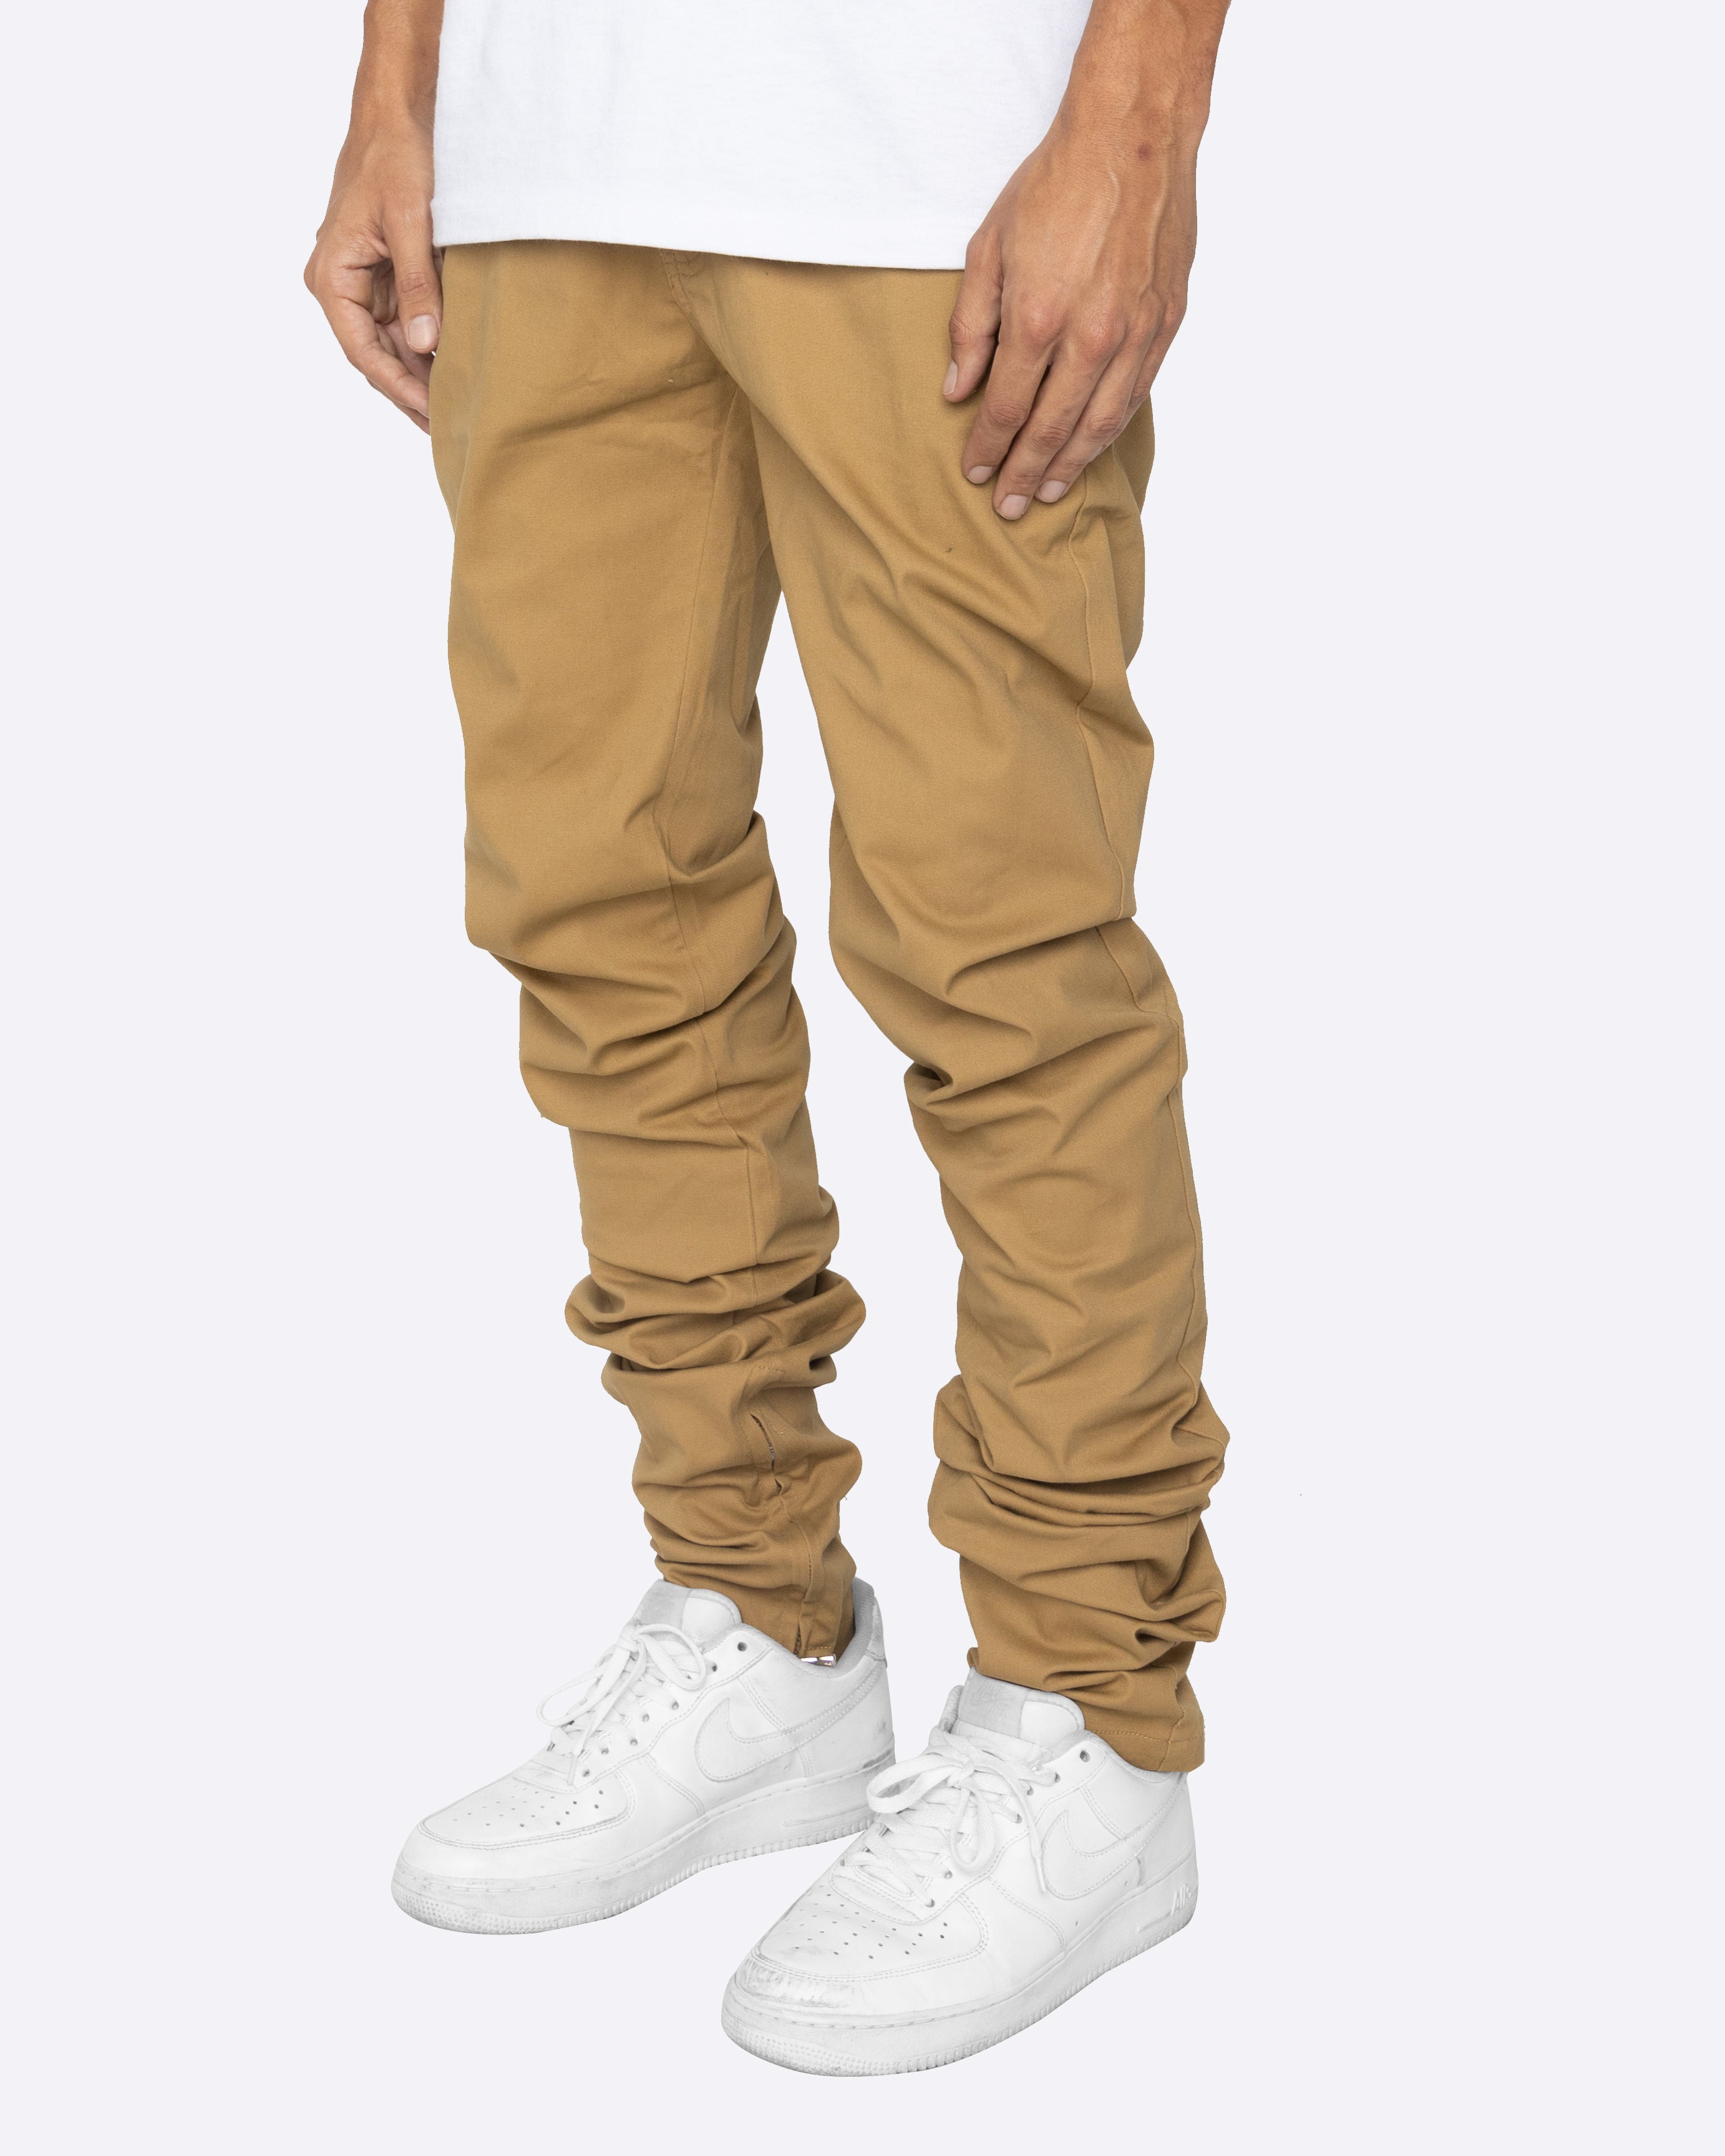 RBC Soft Khaki Trousers-Beige @ Best Price Online | Jumia Kenya